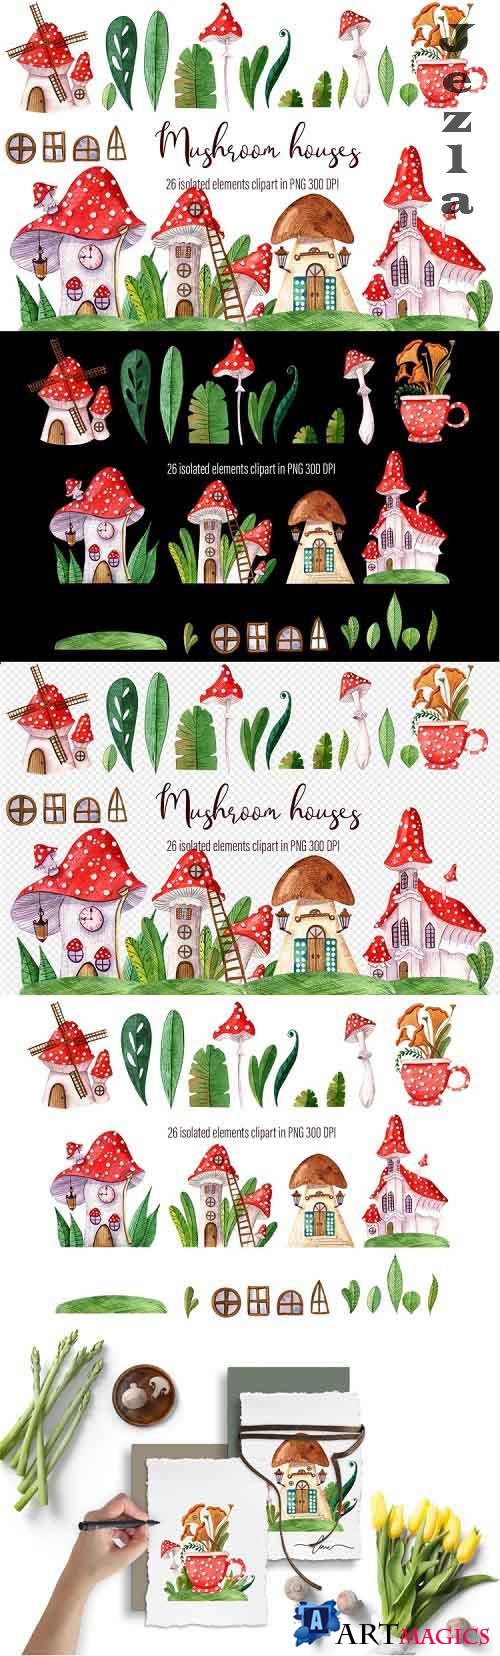 Watercolor hand-drawn set of beautiful Mushroom houses - 1217917